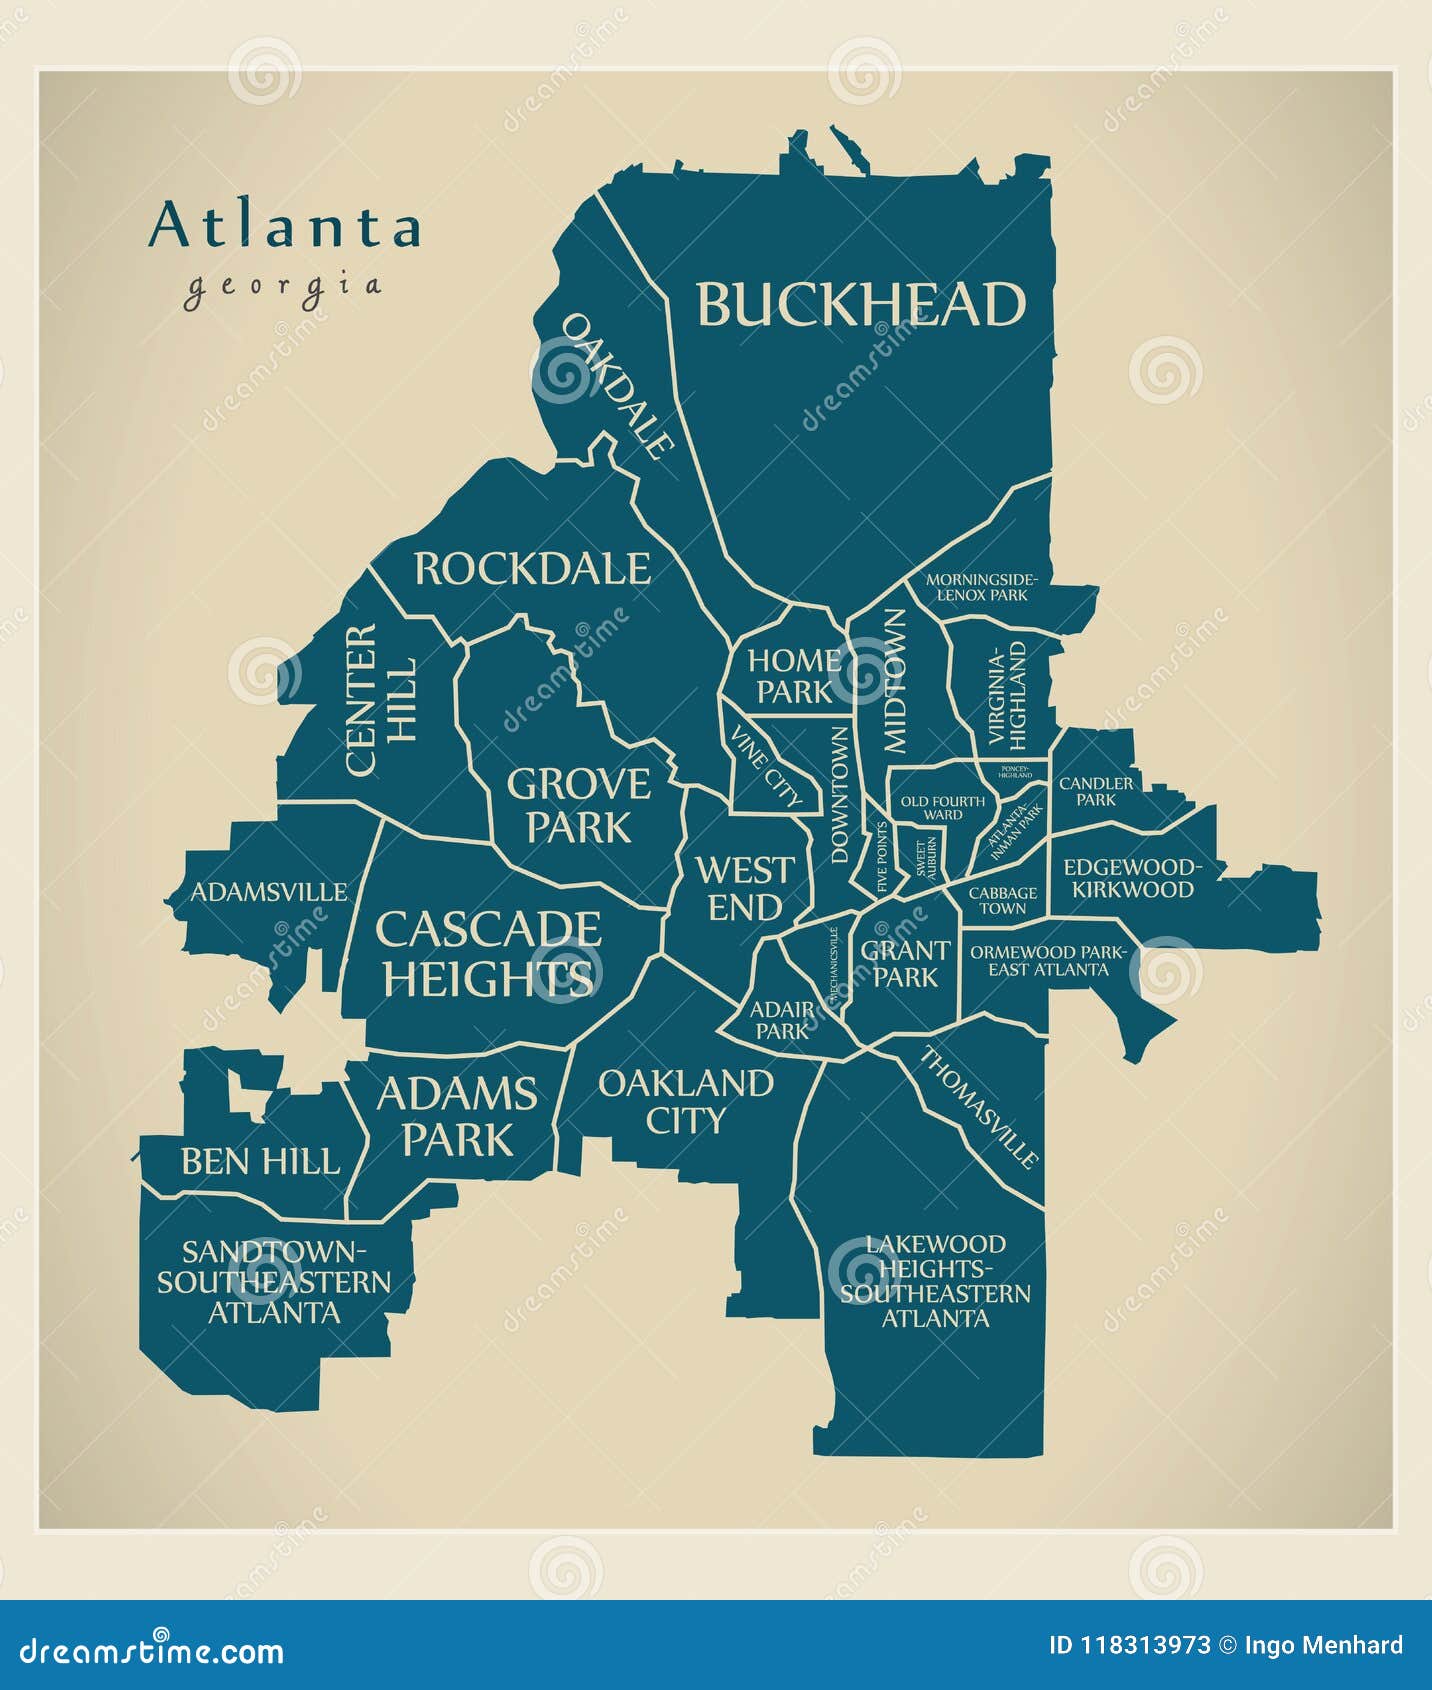 Atlanta Ga Map With Cities 